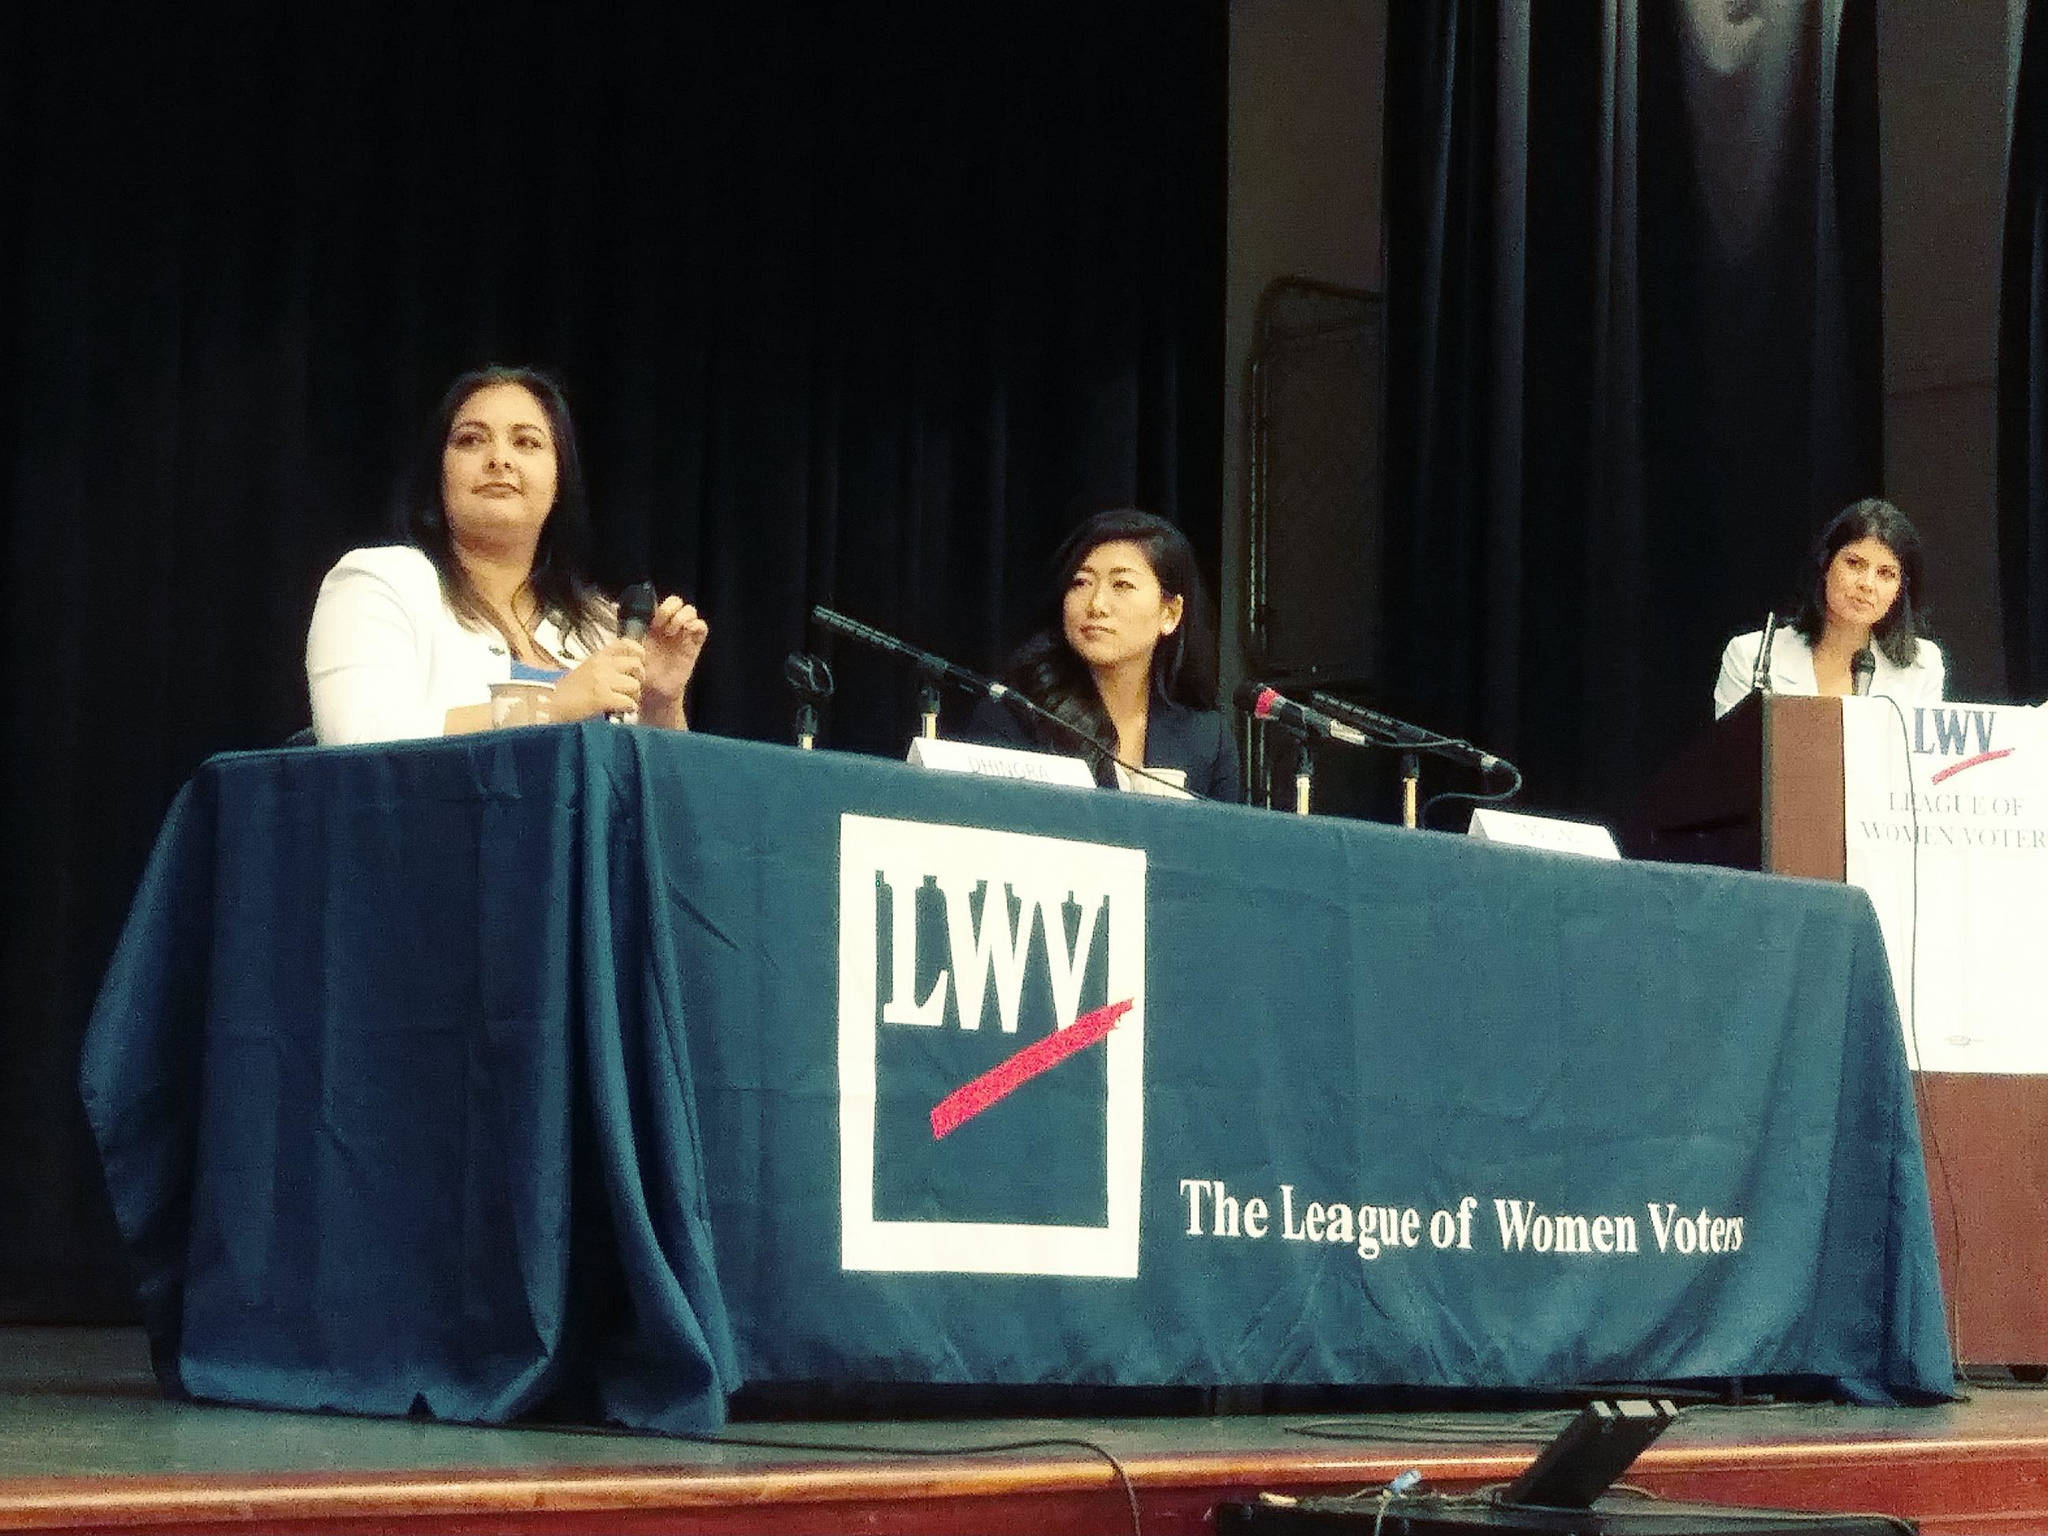 State Senate candidates Manka Dhingra, left, and Jinyoung Lee Englund, center, at Monday’s League of Women Voters debate in Redmond. Aaron Kunkler/Redmond Reporter